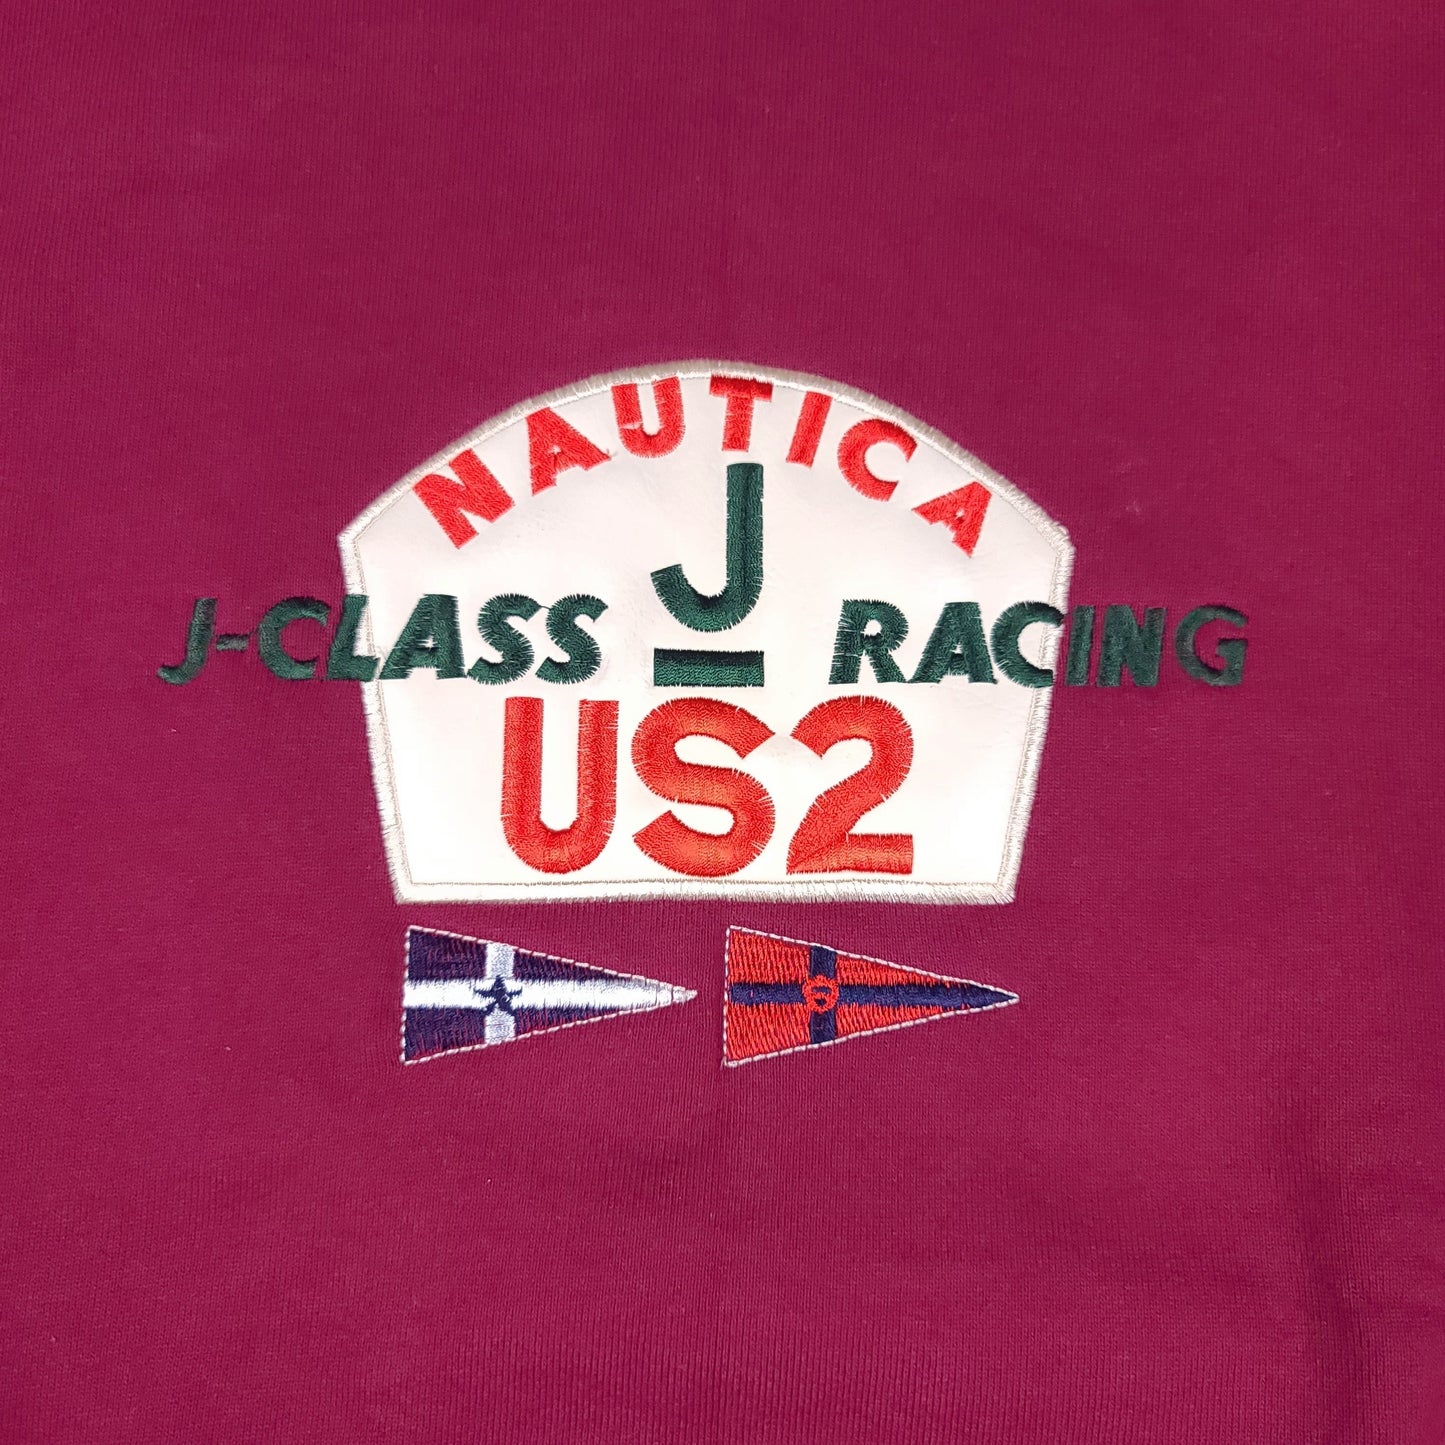 Vintage Nautica J-Class Racing US2 Maroon Sweatshirt